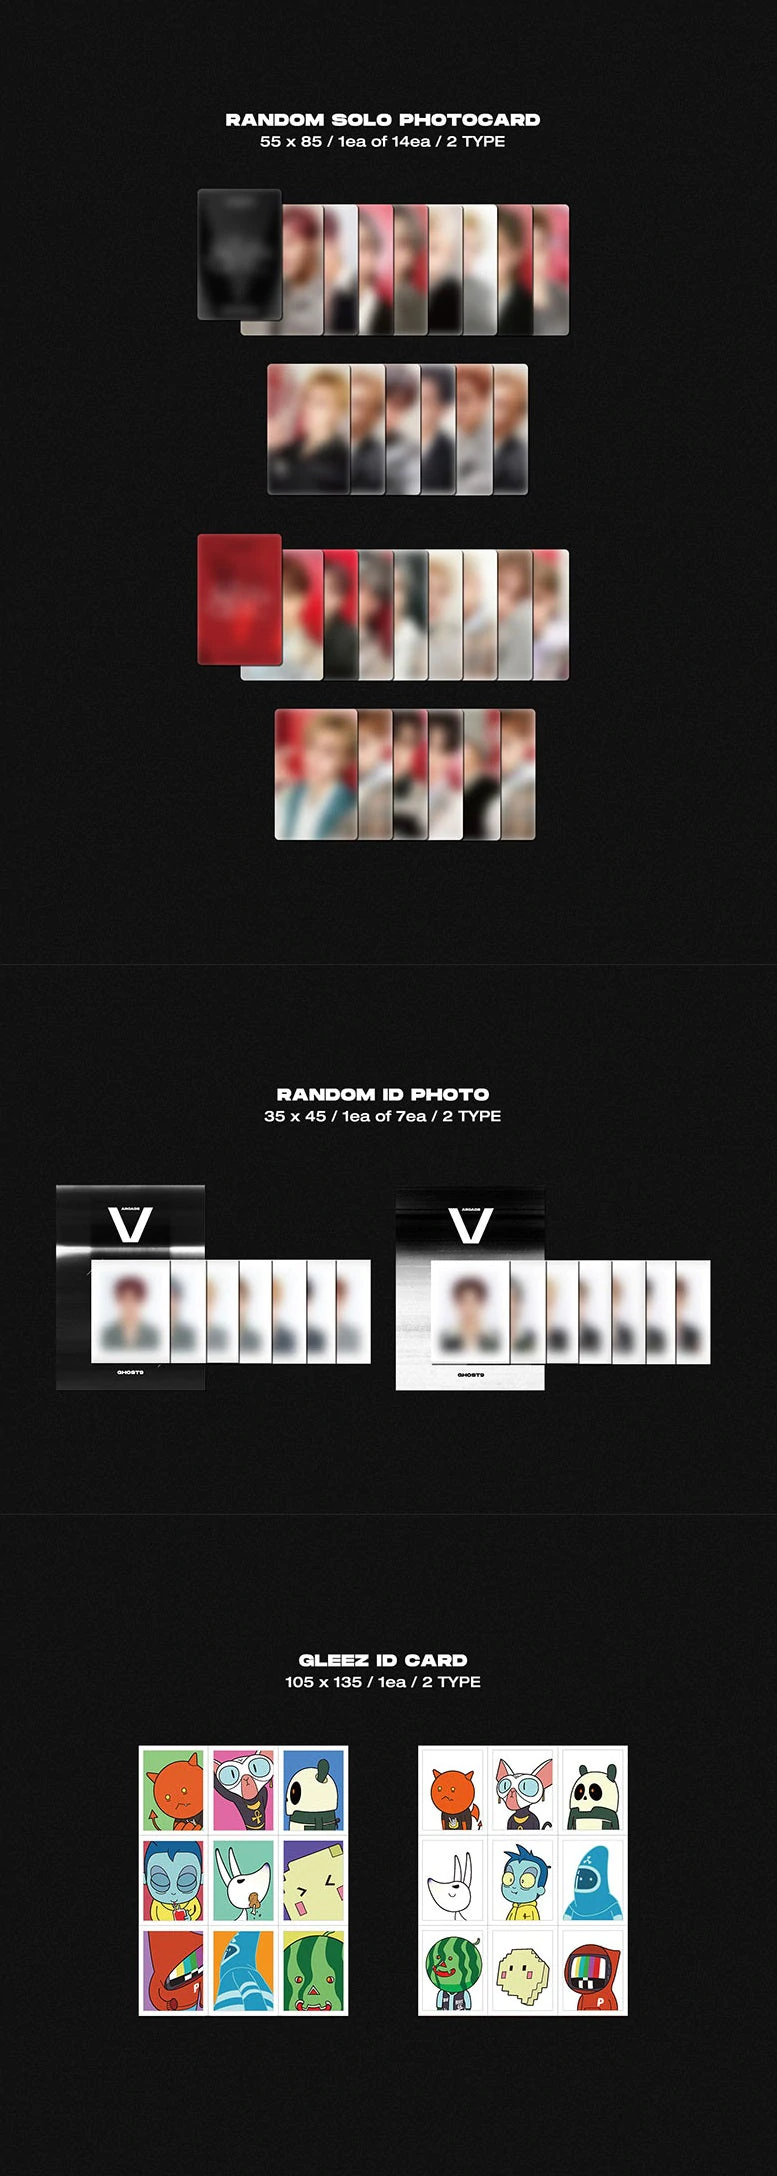 GHOST9 Mini Album Vol. 6 - ARCADE : V (Random Version)